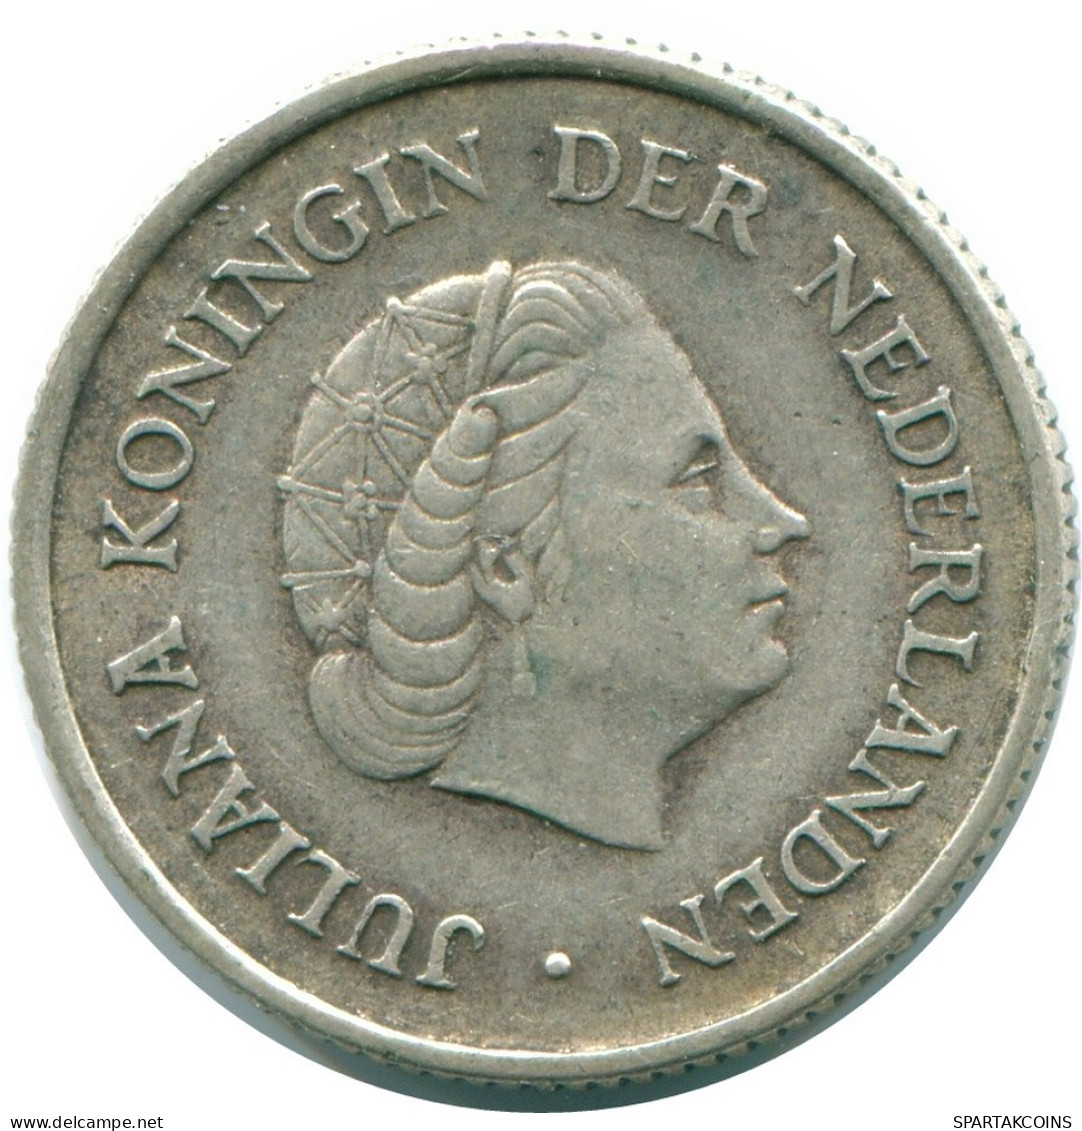 1/4 GULDEN 1965 NETHERLANDS ANTILLES SILVER Colonial Coin #NL11425.4.U.A - Niederländische Antillen